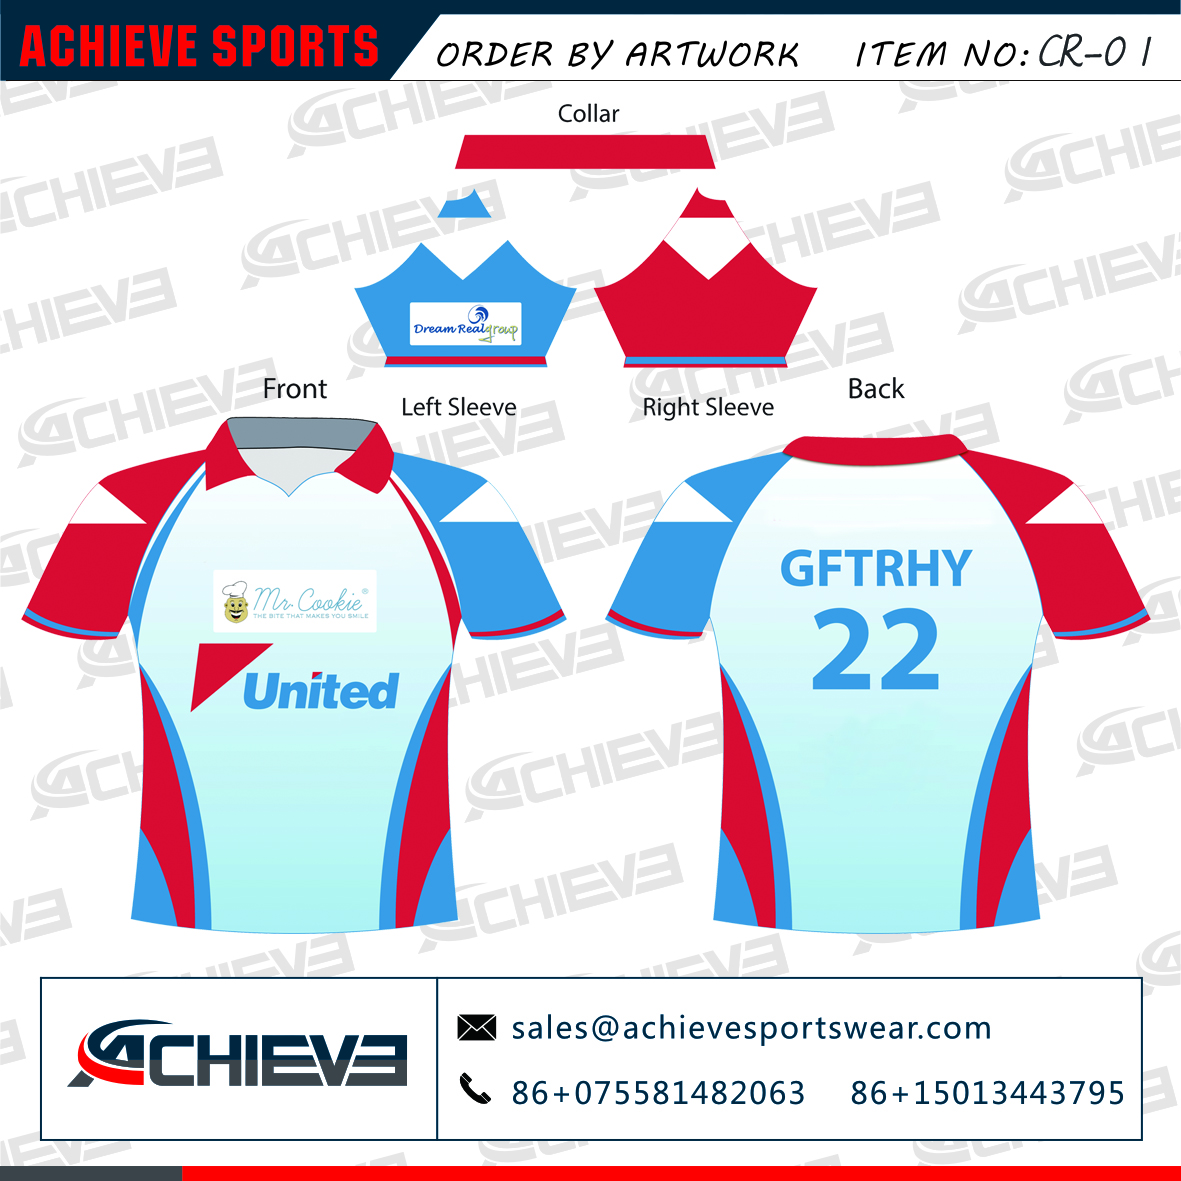 New model best cricket jersey polo shirt design